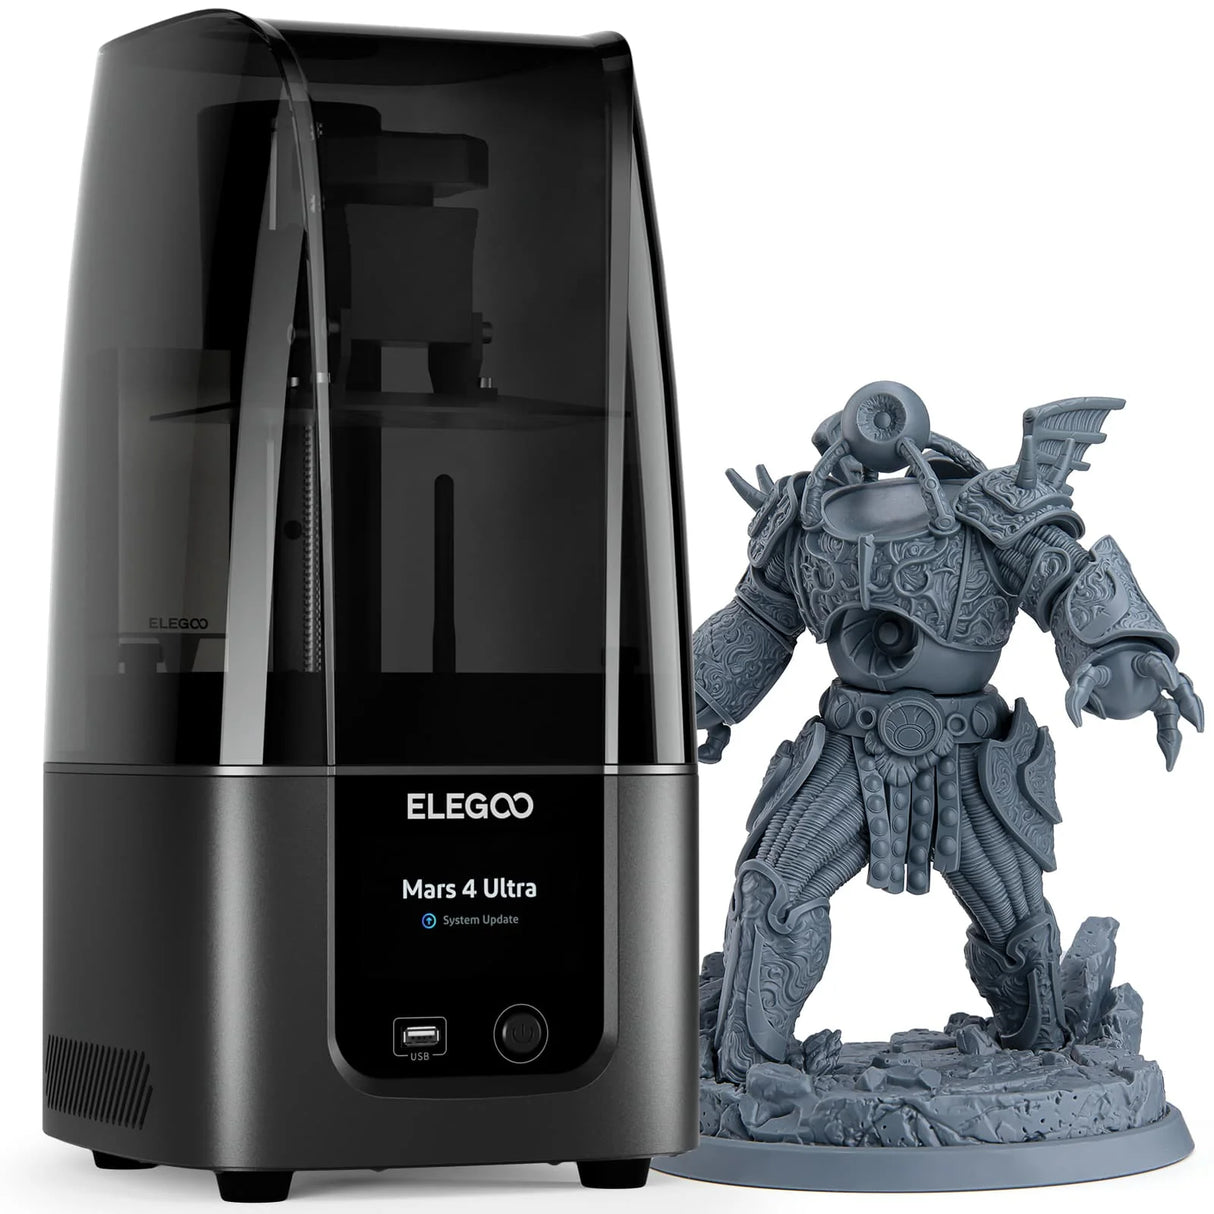  ELEGOO Upgraded ABS-Like 3D Printer Resin 2.0, 405nm